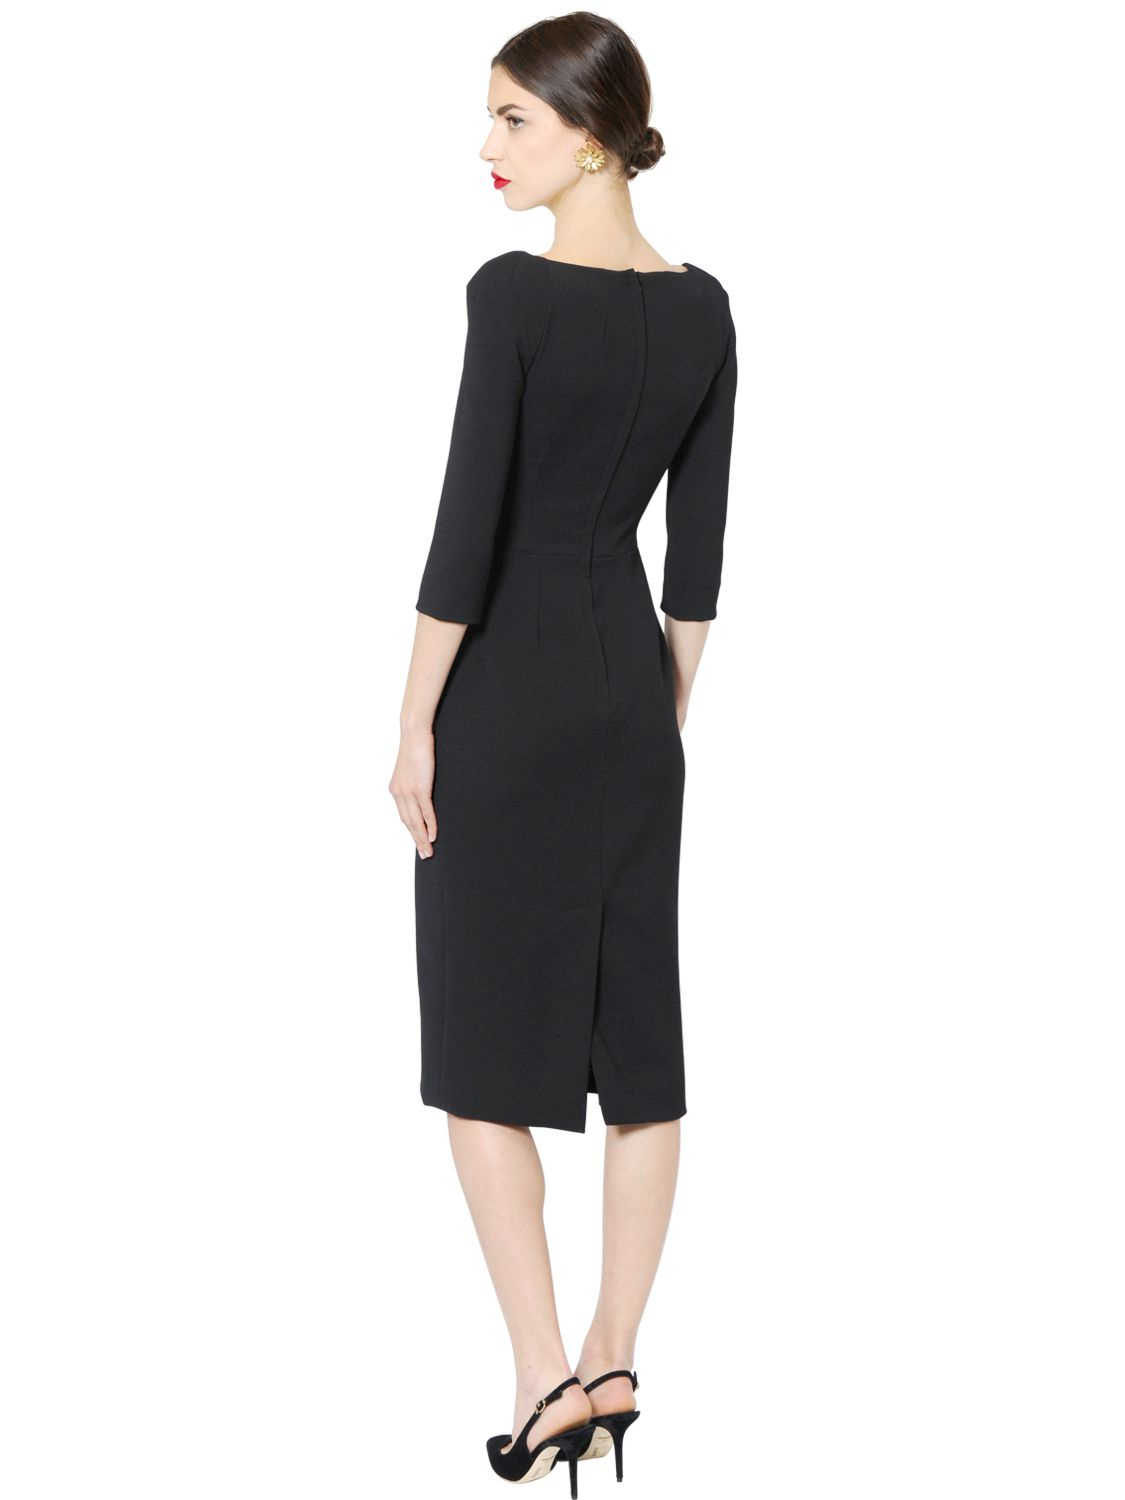 Dolce & Gabbana Stretch Double Wool Crepe Dress in Black - Lyst